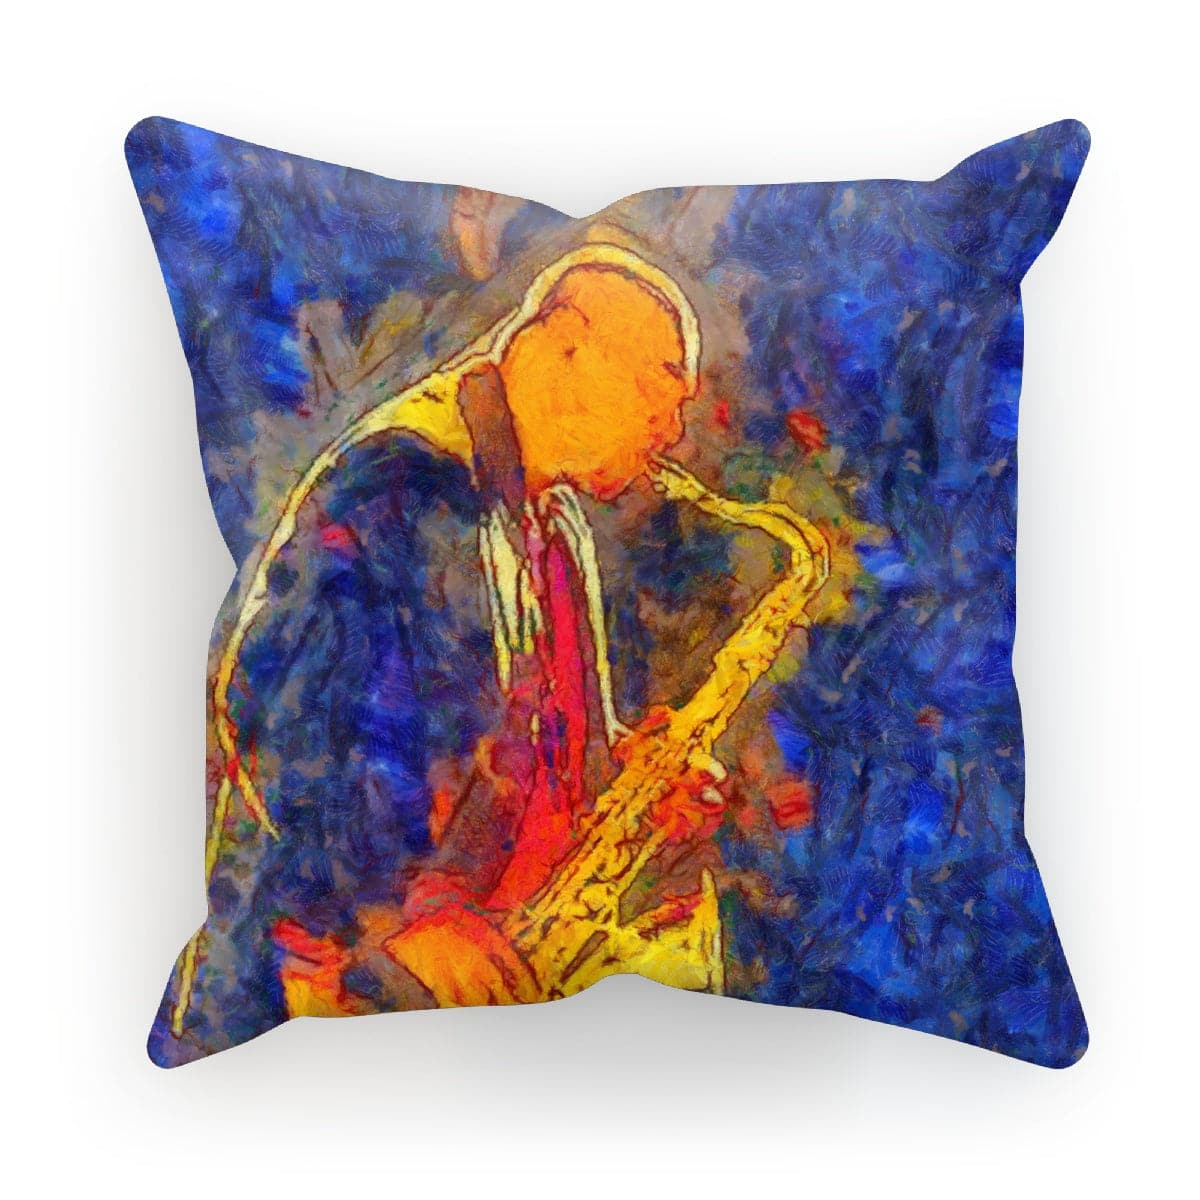 Colorful Sax Player Cushion by SENSUS STUDIO